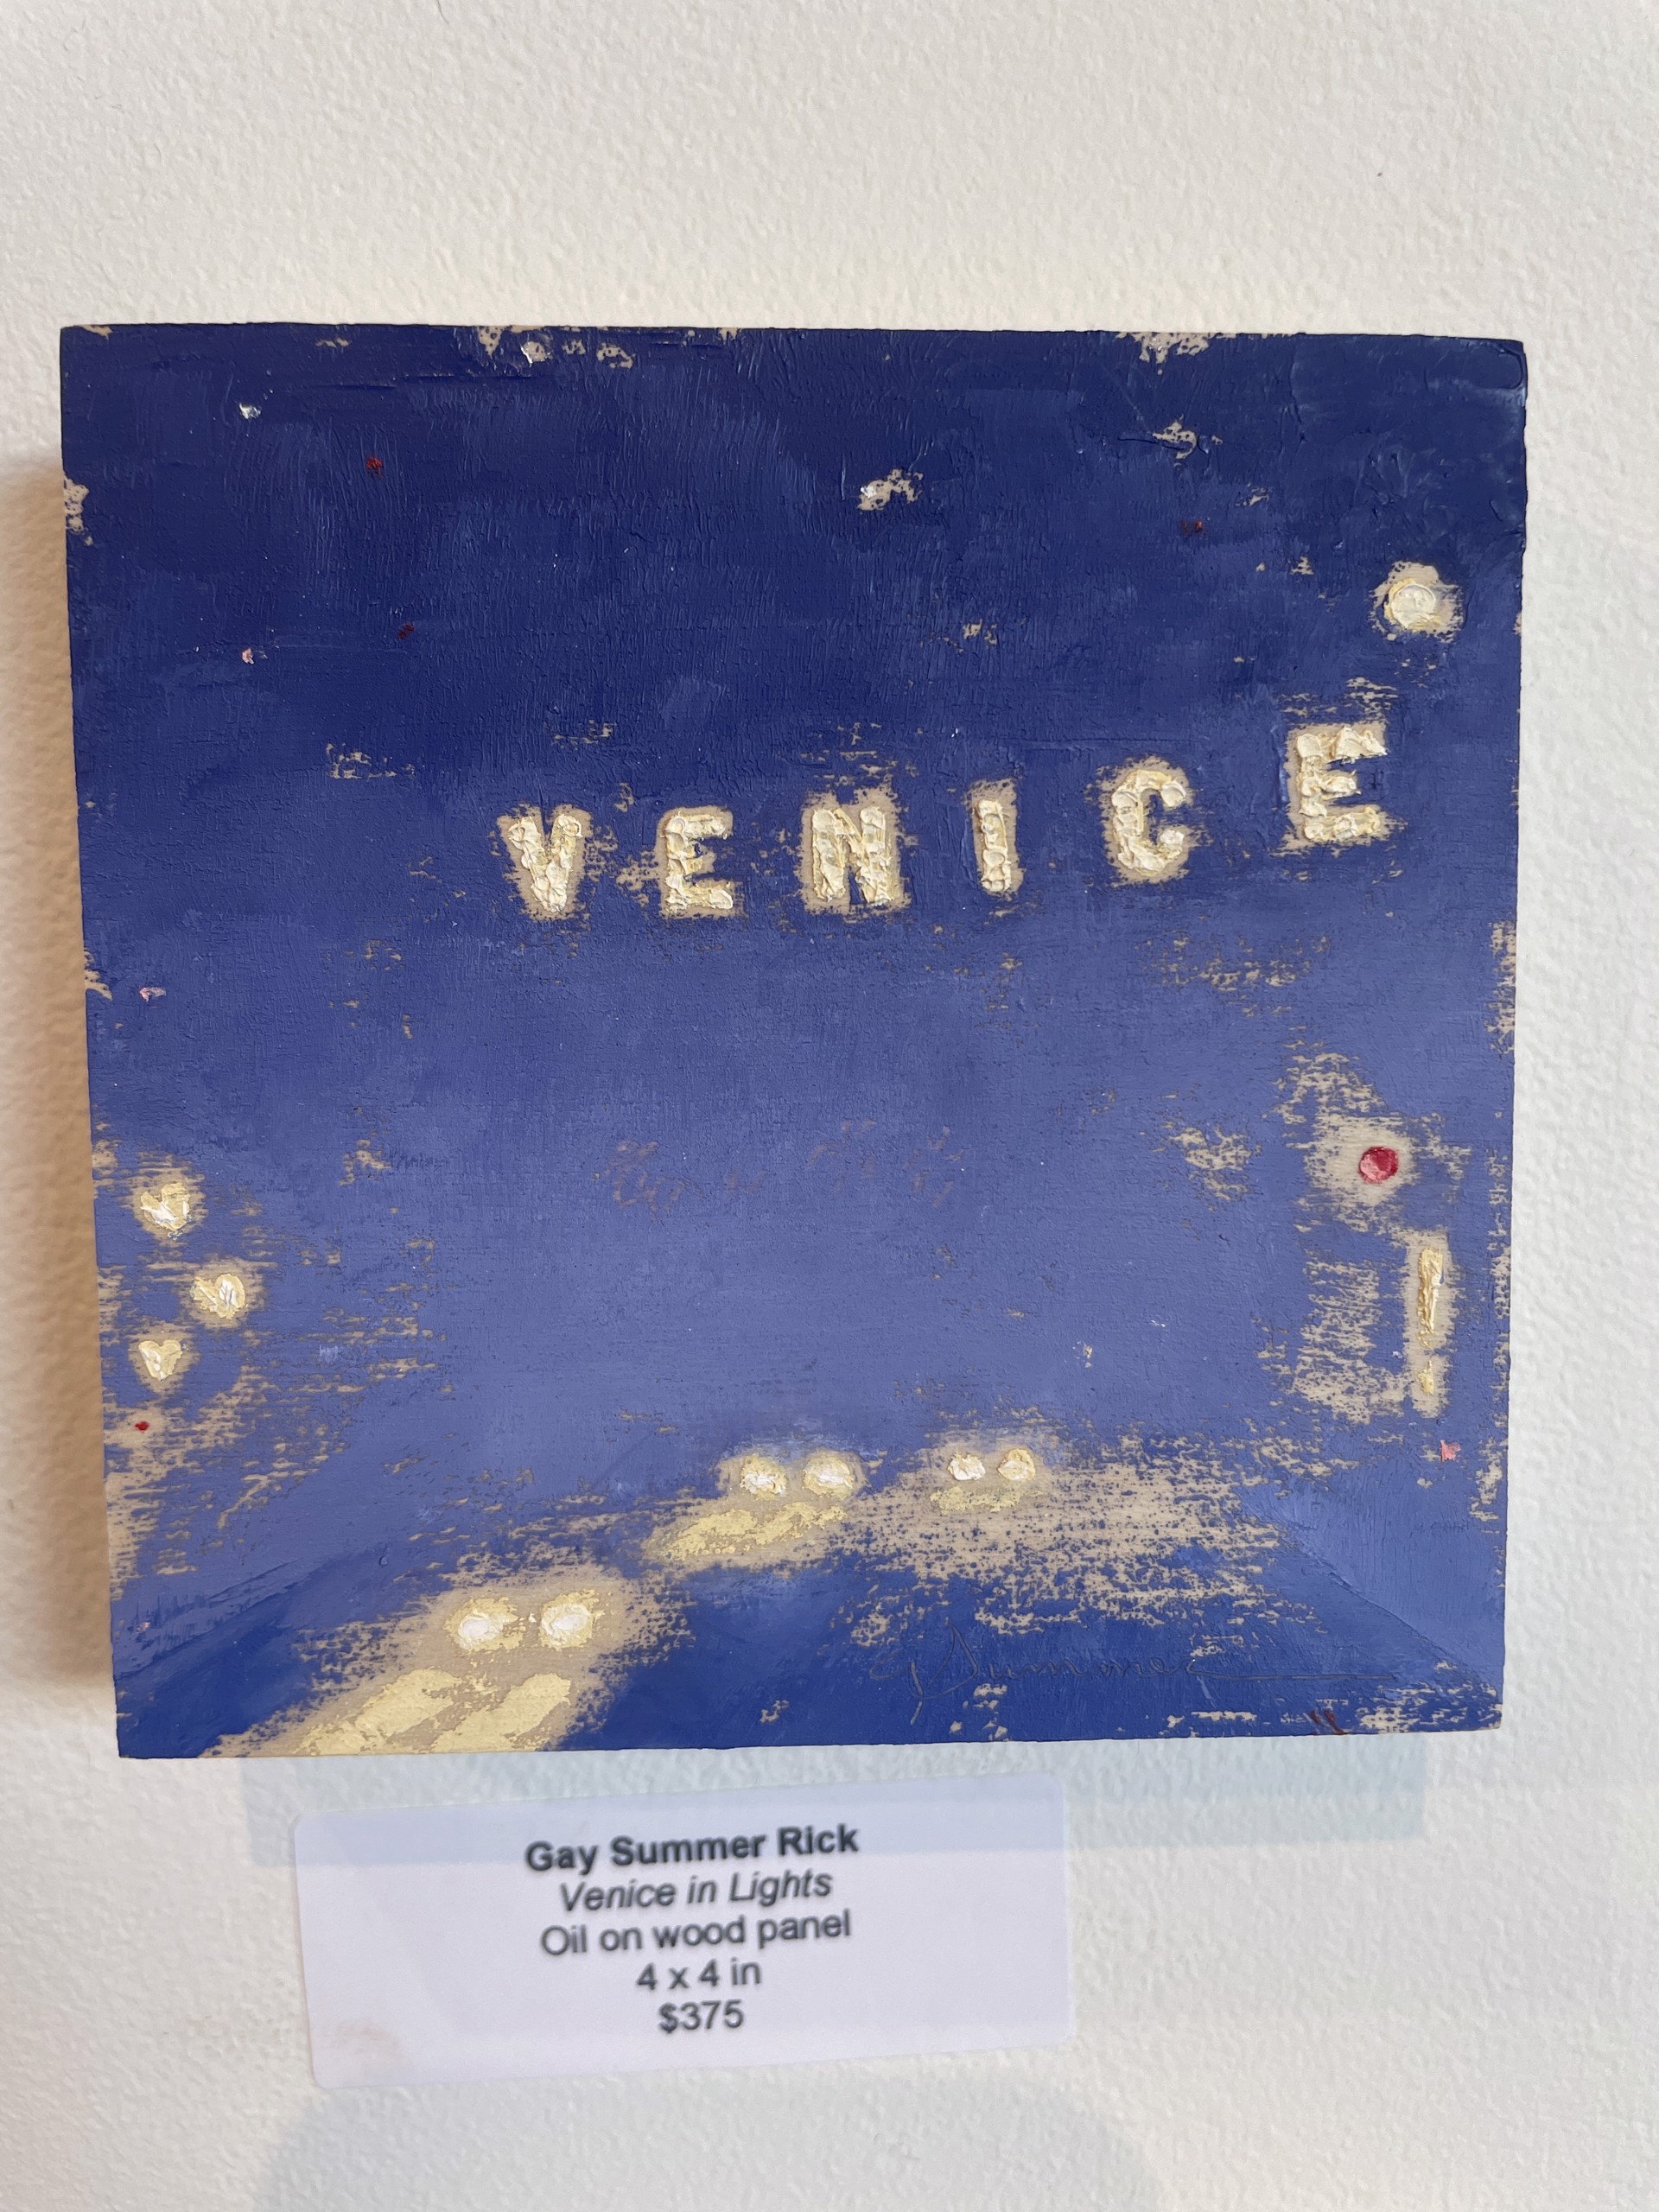 Venice in Lights by Gay Summer Rick